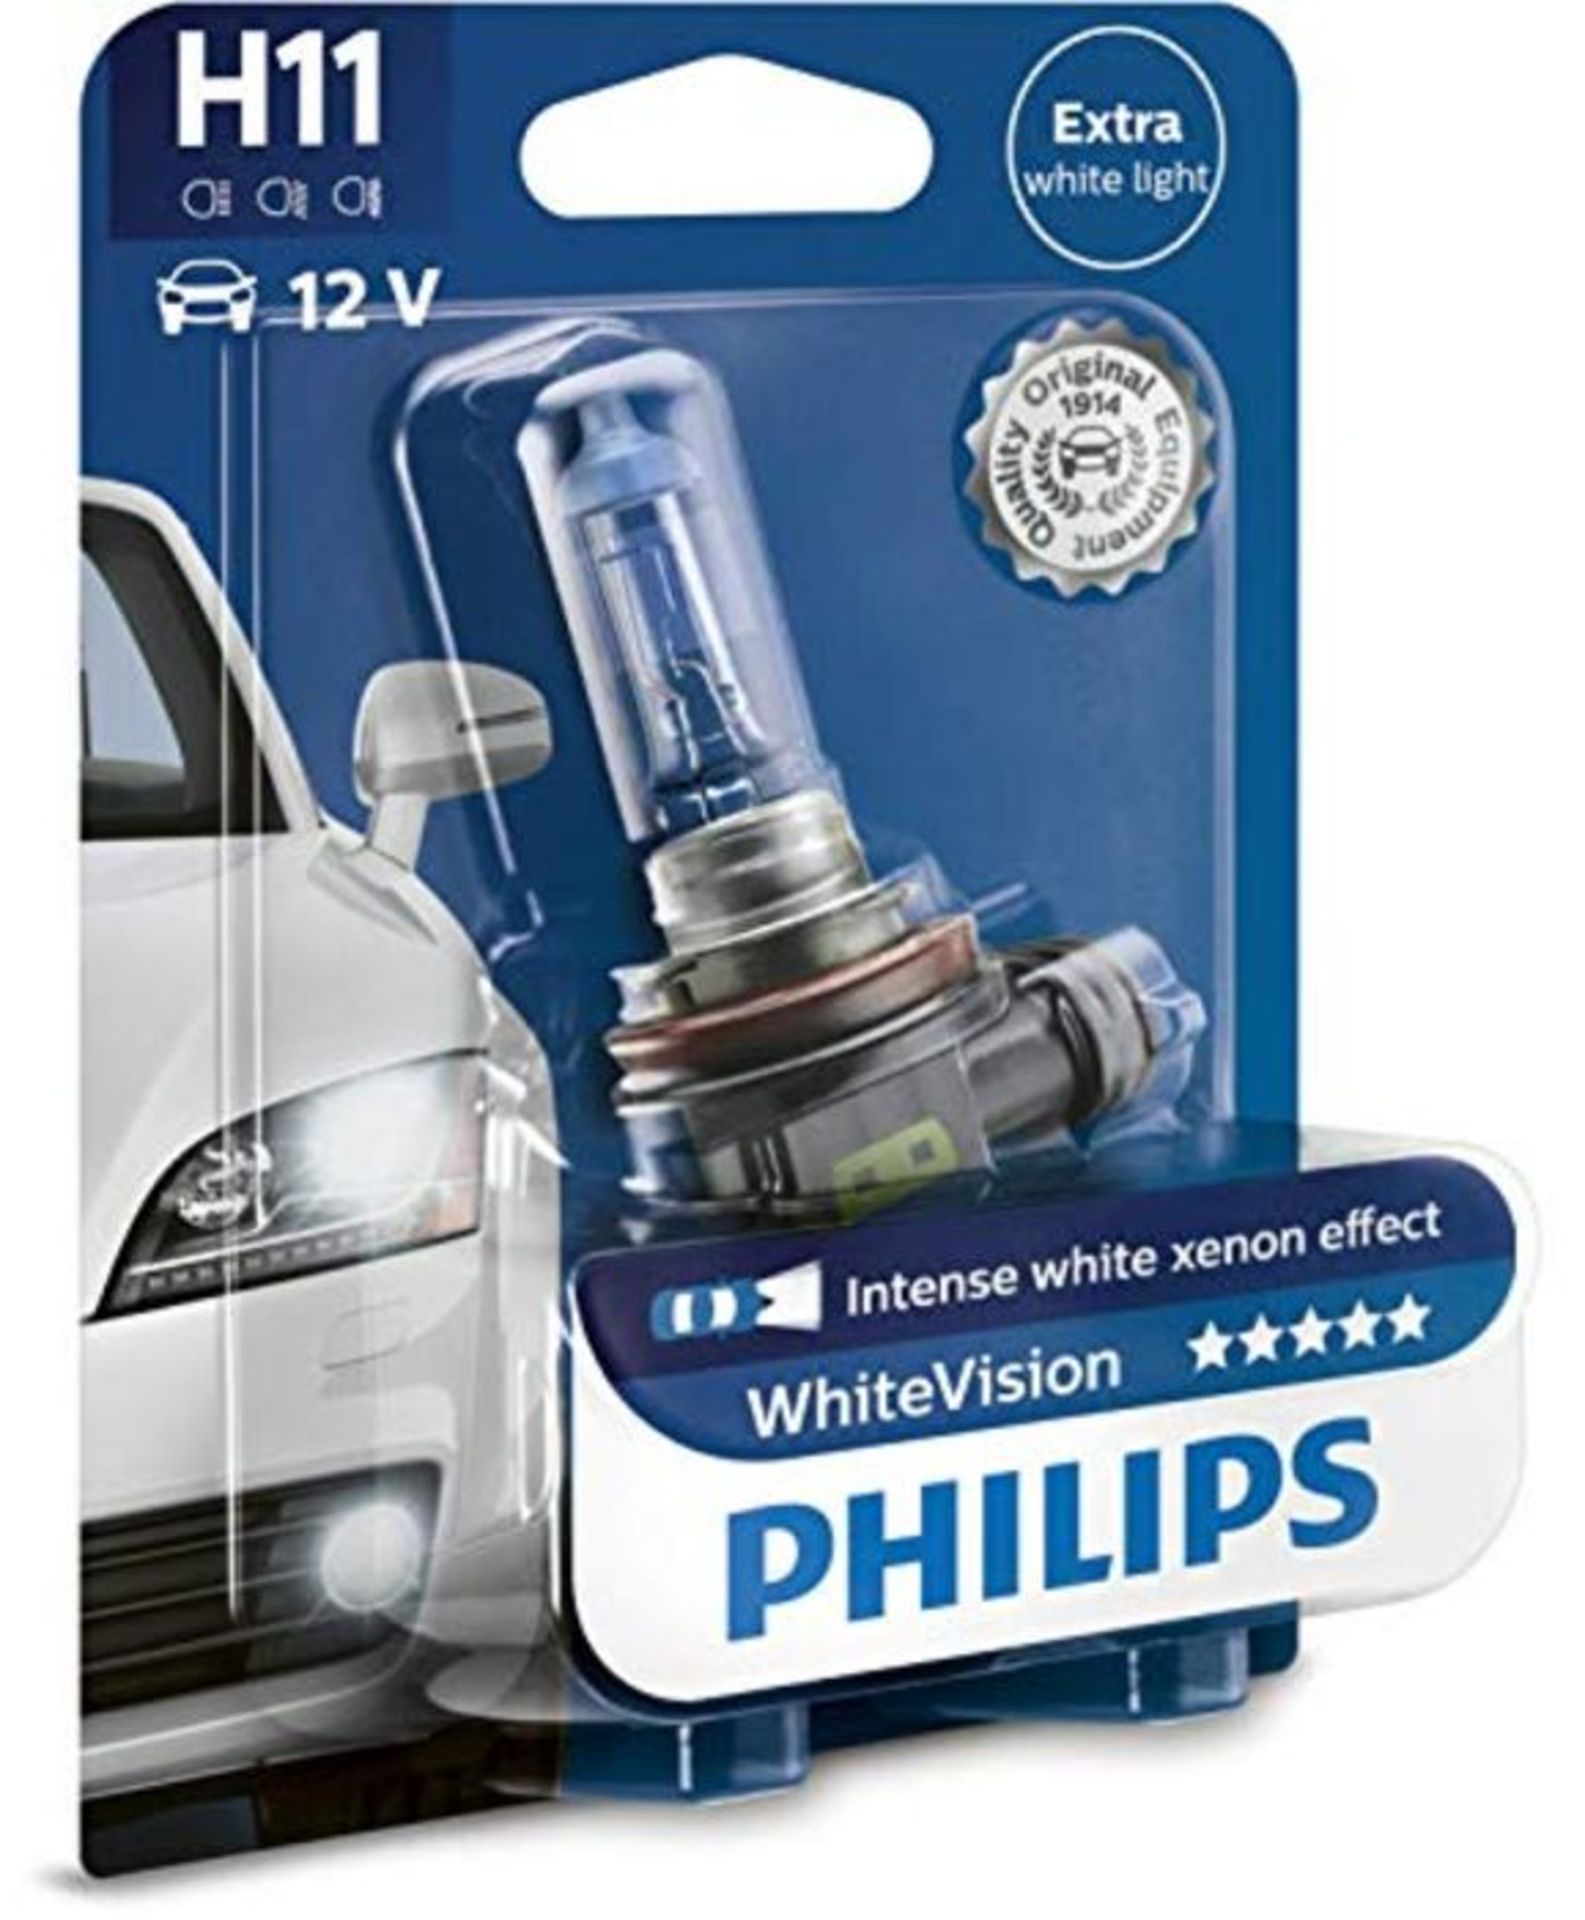 Philips WhiteVision Xenon effect H11 headlight bulb 12362WHVB1, single blister